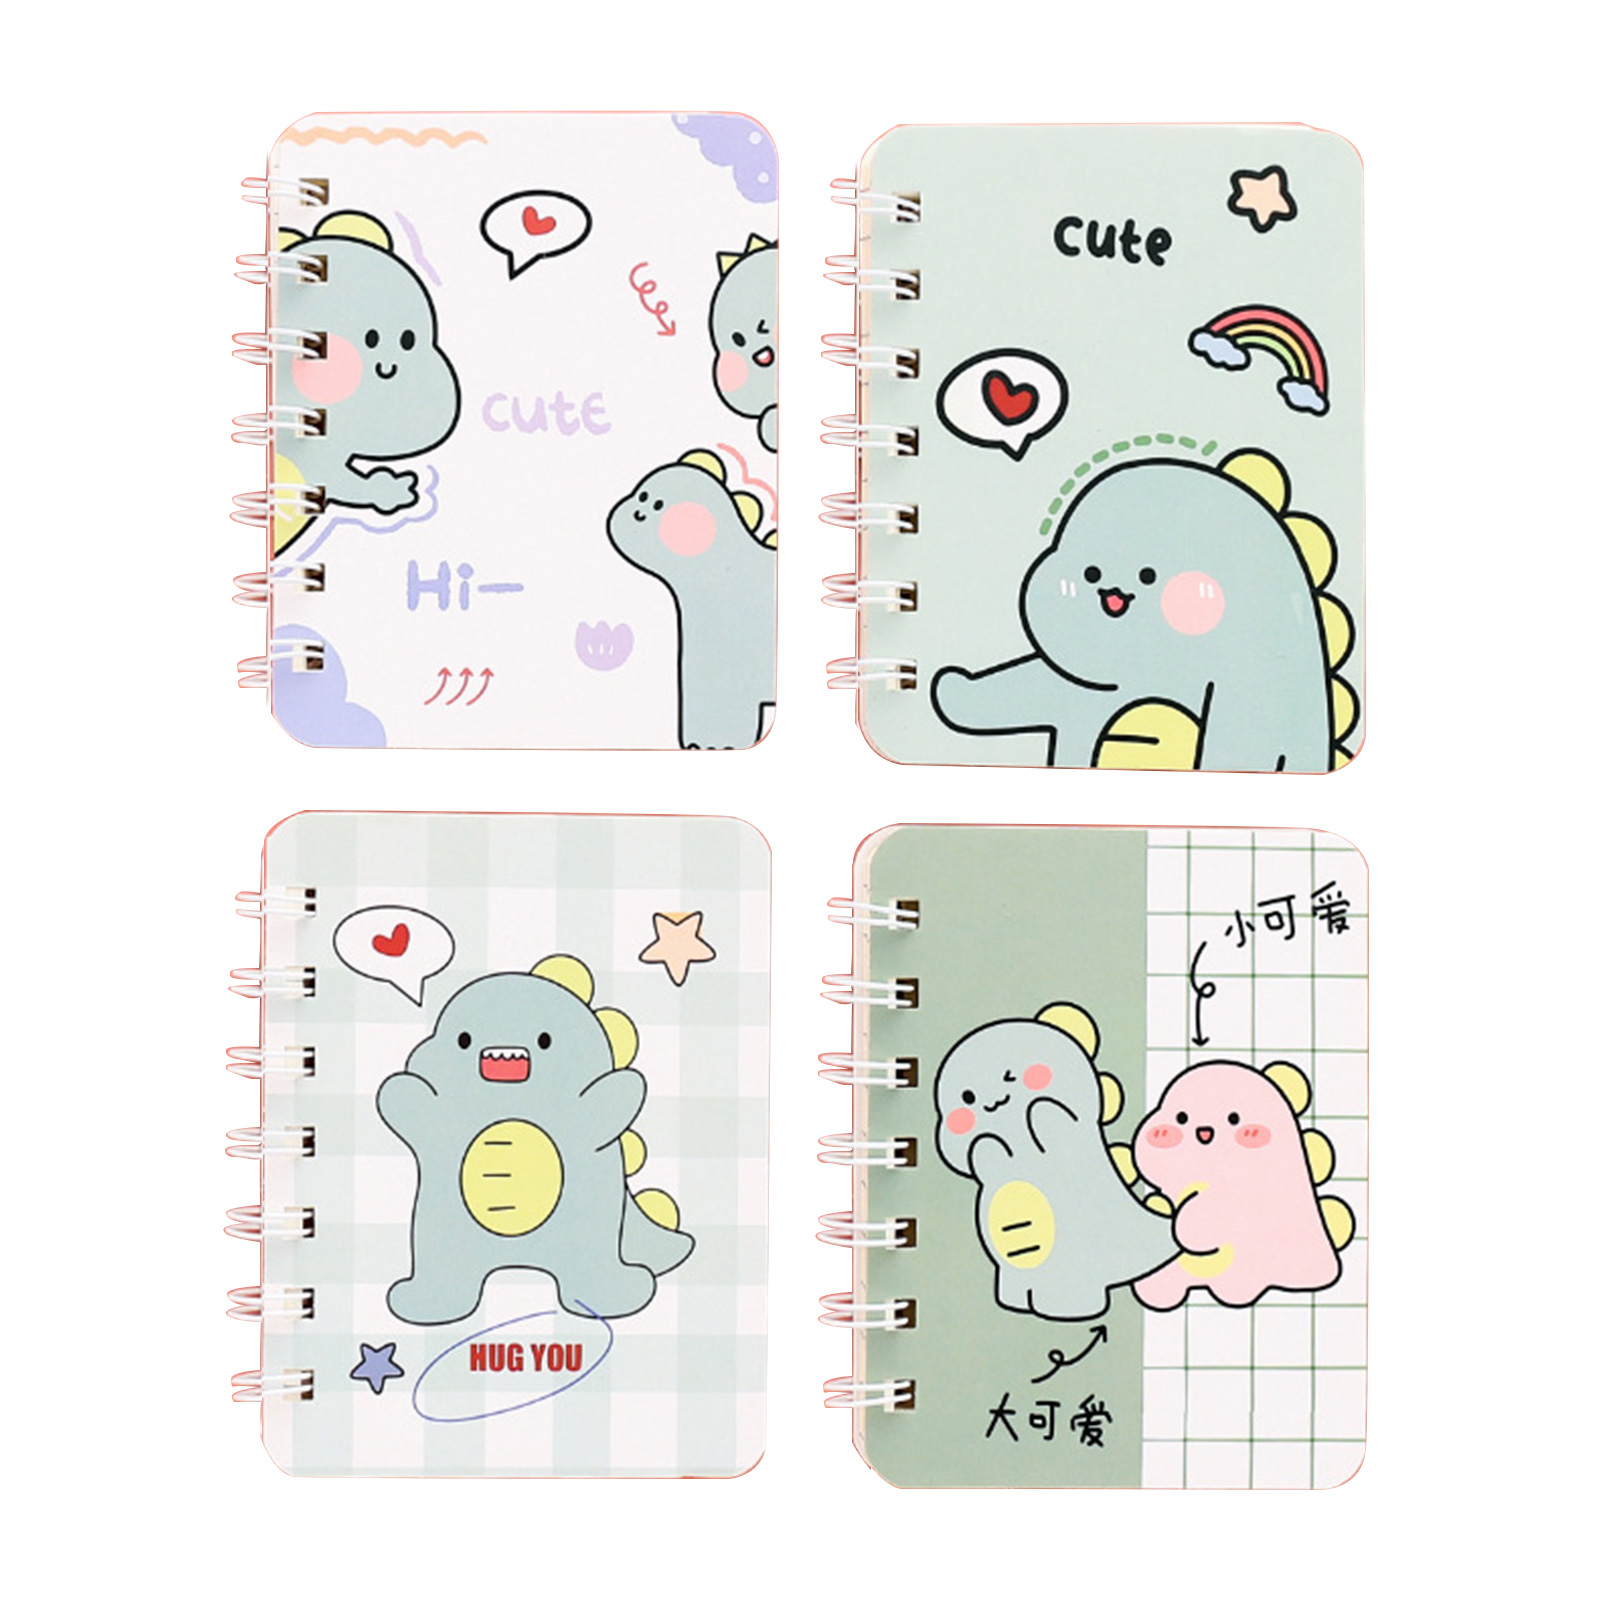 YEUHTLL Cartoon Mini Pocket Spiral Notebook Blank/Lined Note Book 4.13x3.15  Inch Memo Notepad for Preschool Kindergarten Kids